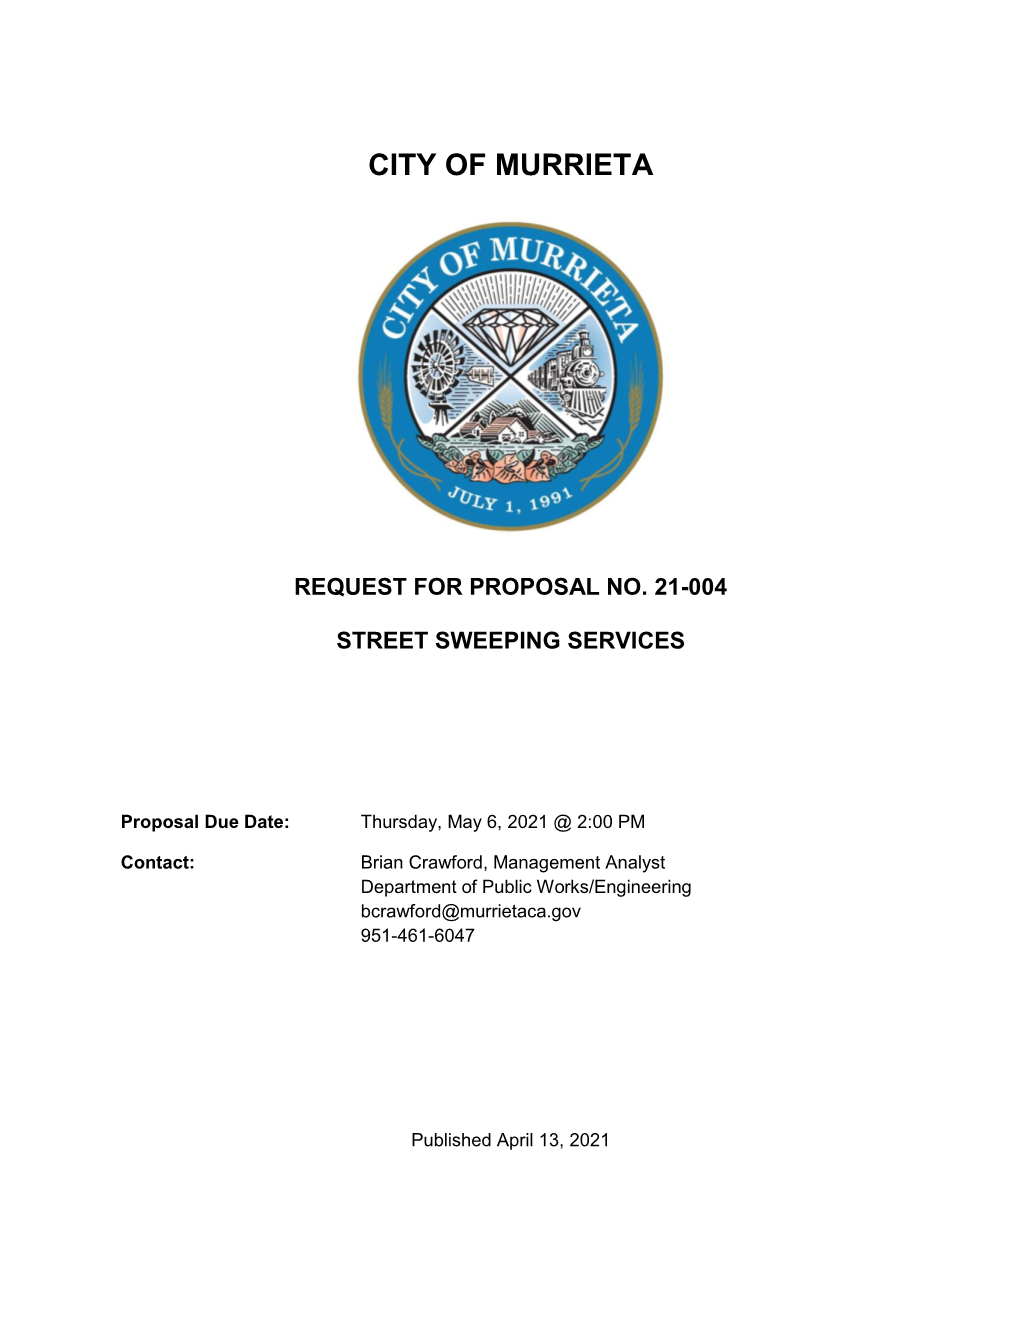 City of Murrieta Street Sweeping RFP No. 21-004 April2021